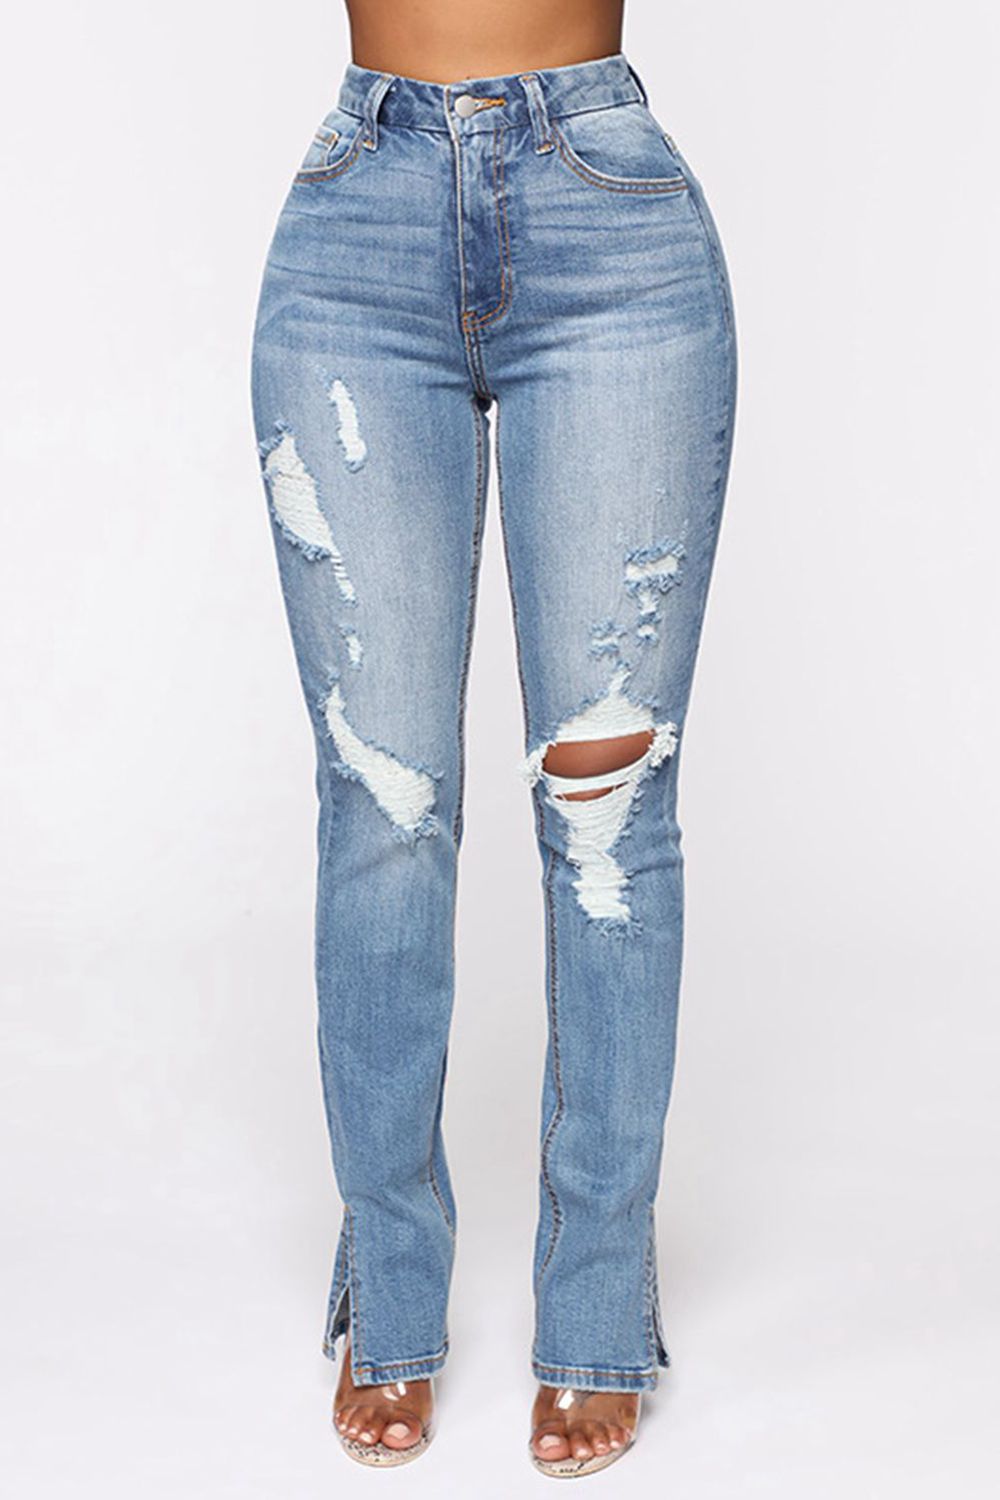 Distressed Slit Jeans ( S - 2X )